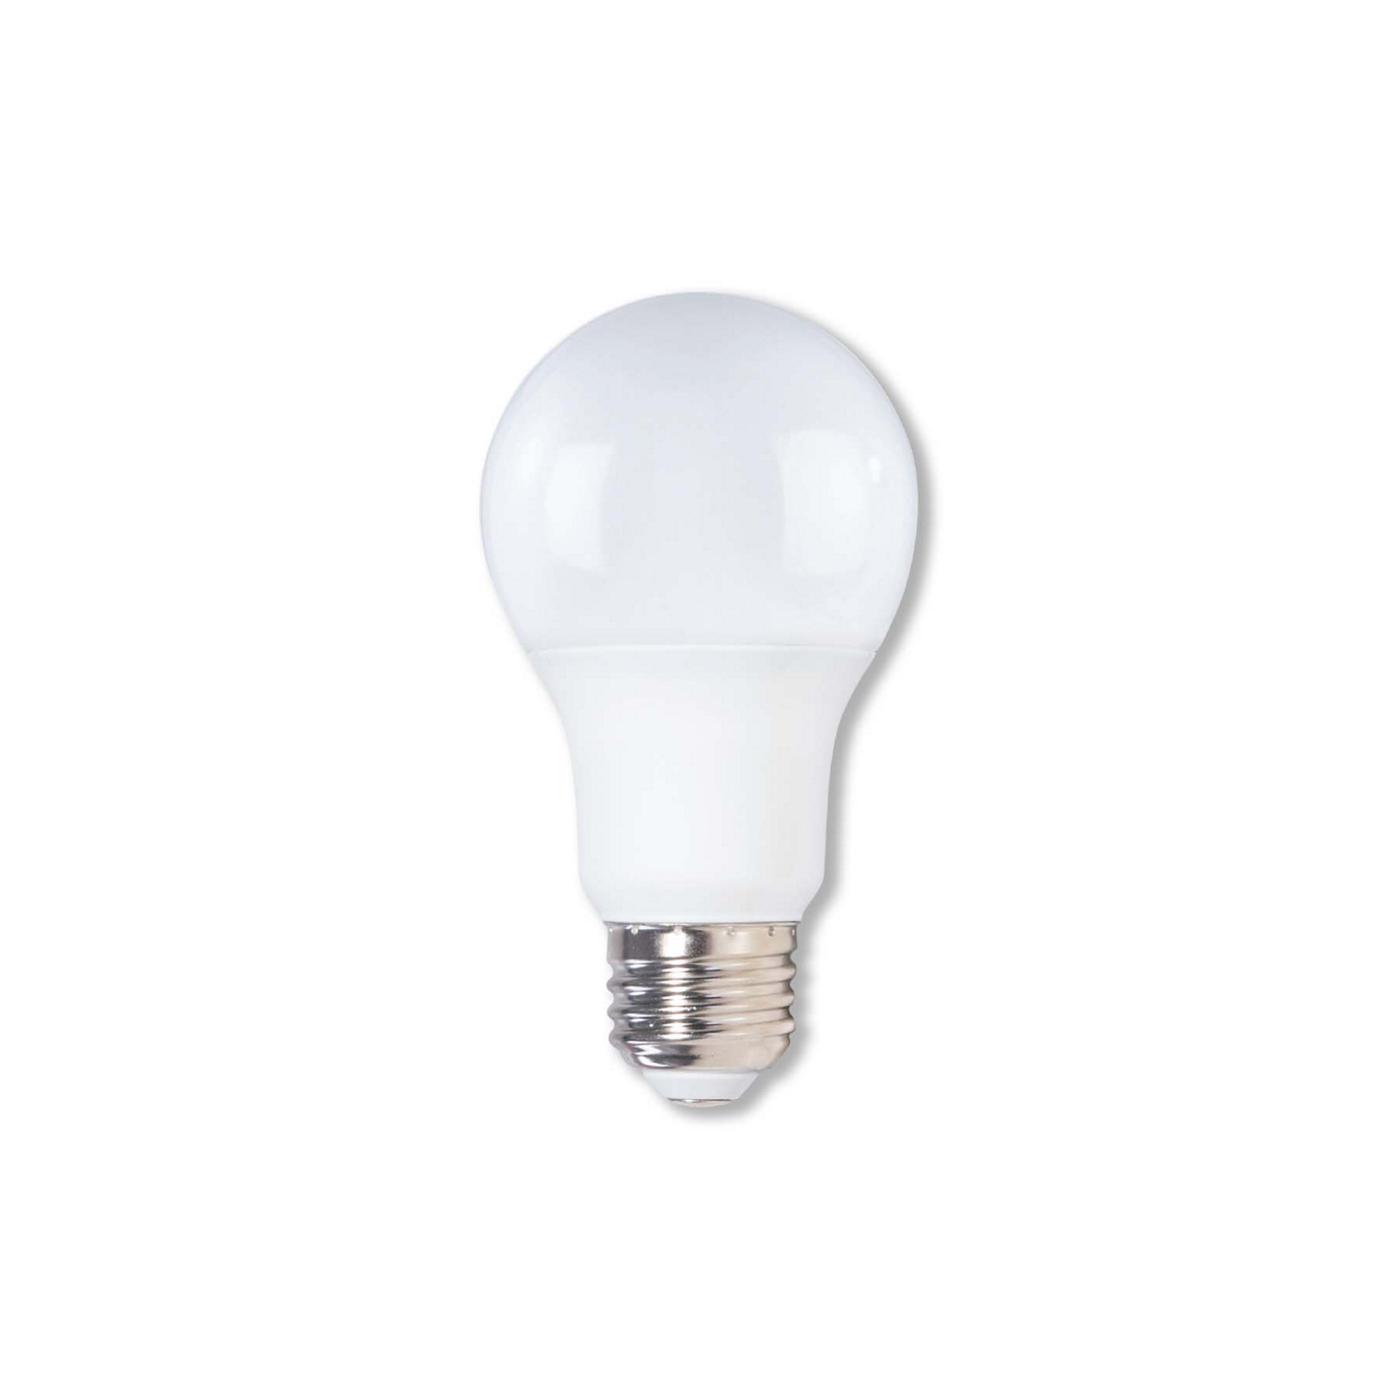 H-E-B A19 75-Watt LED Light Bulbs - Bright White; image 2 of 2